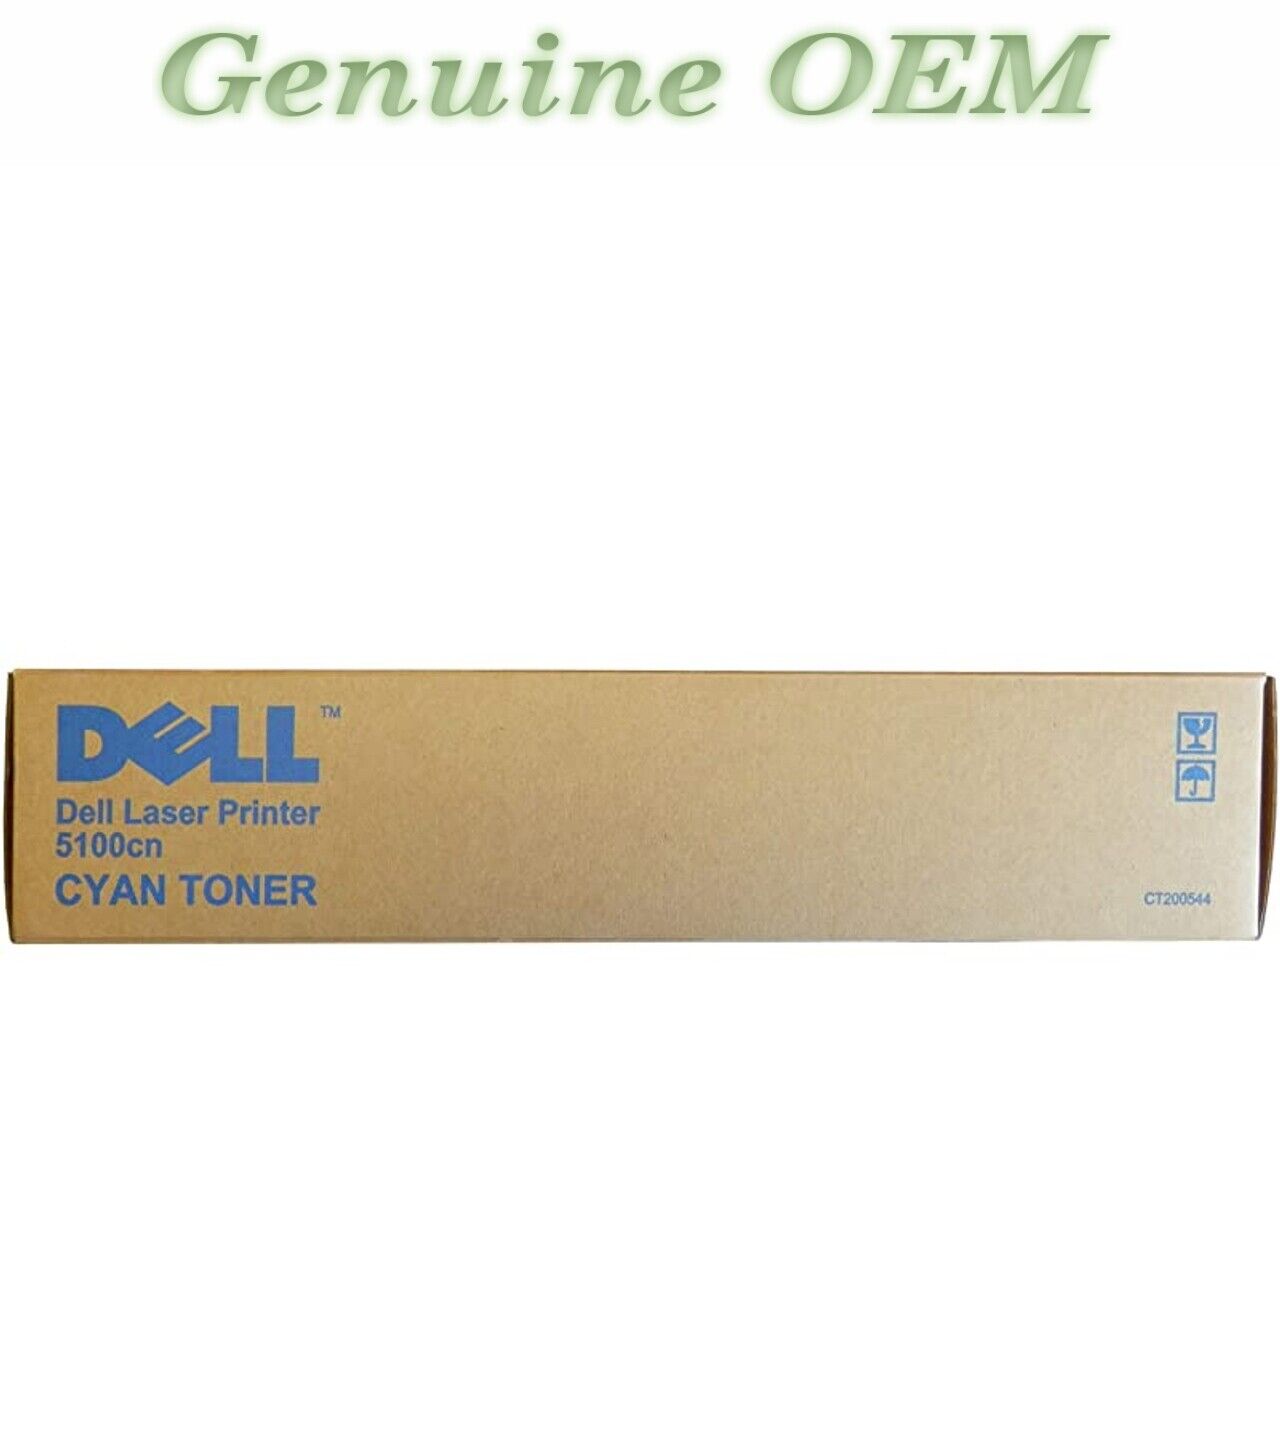 GG579 Original OEM Dell Toner Cartridge, Cyan Genuine Sealed